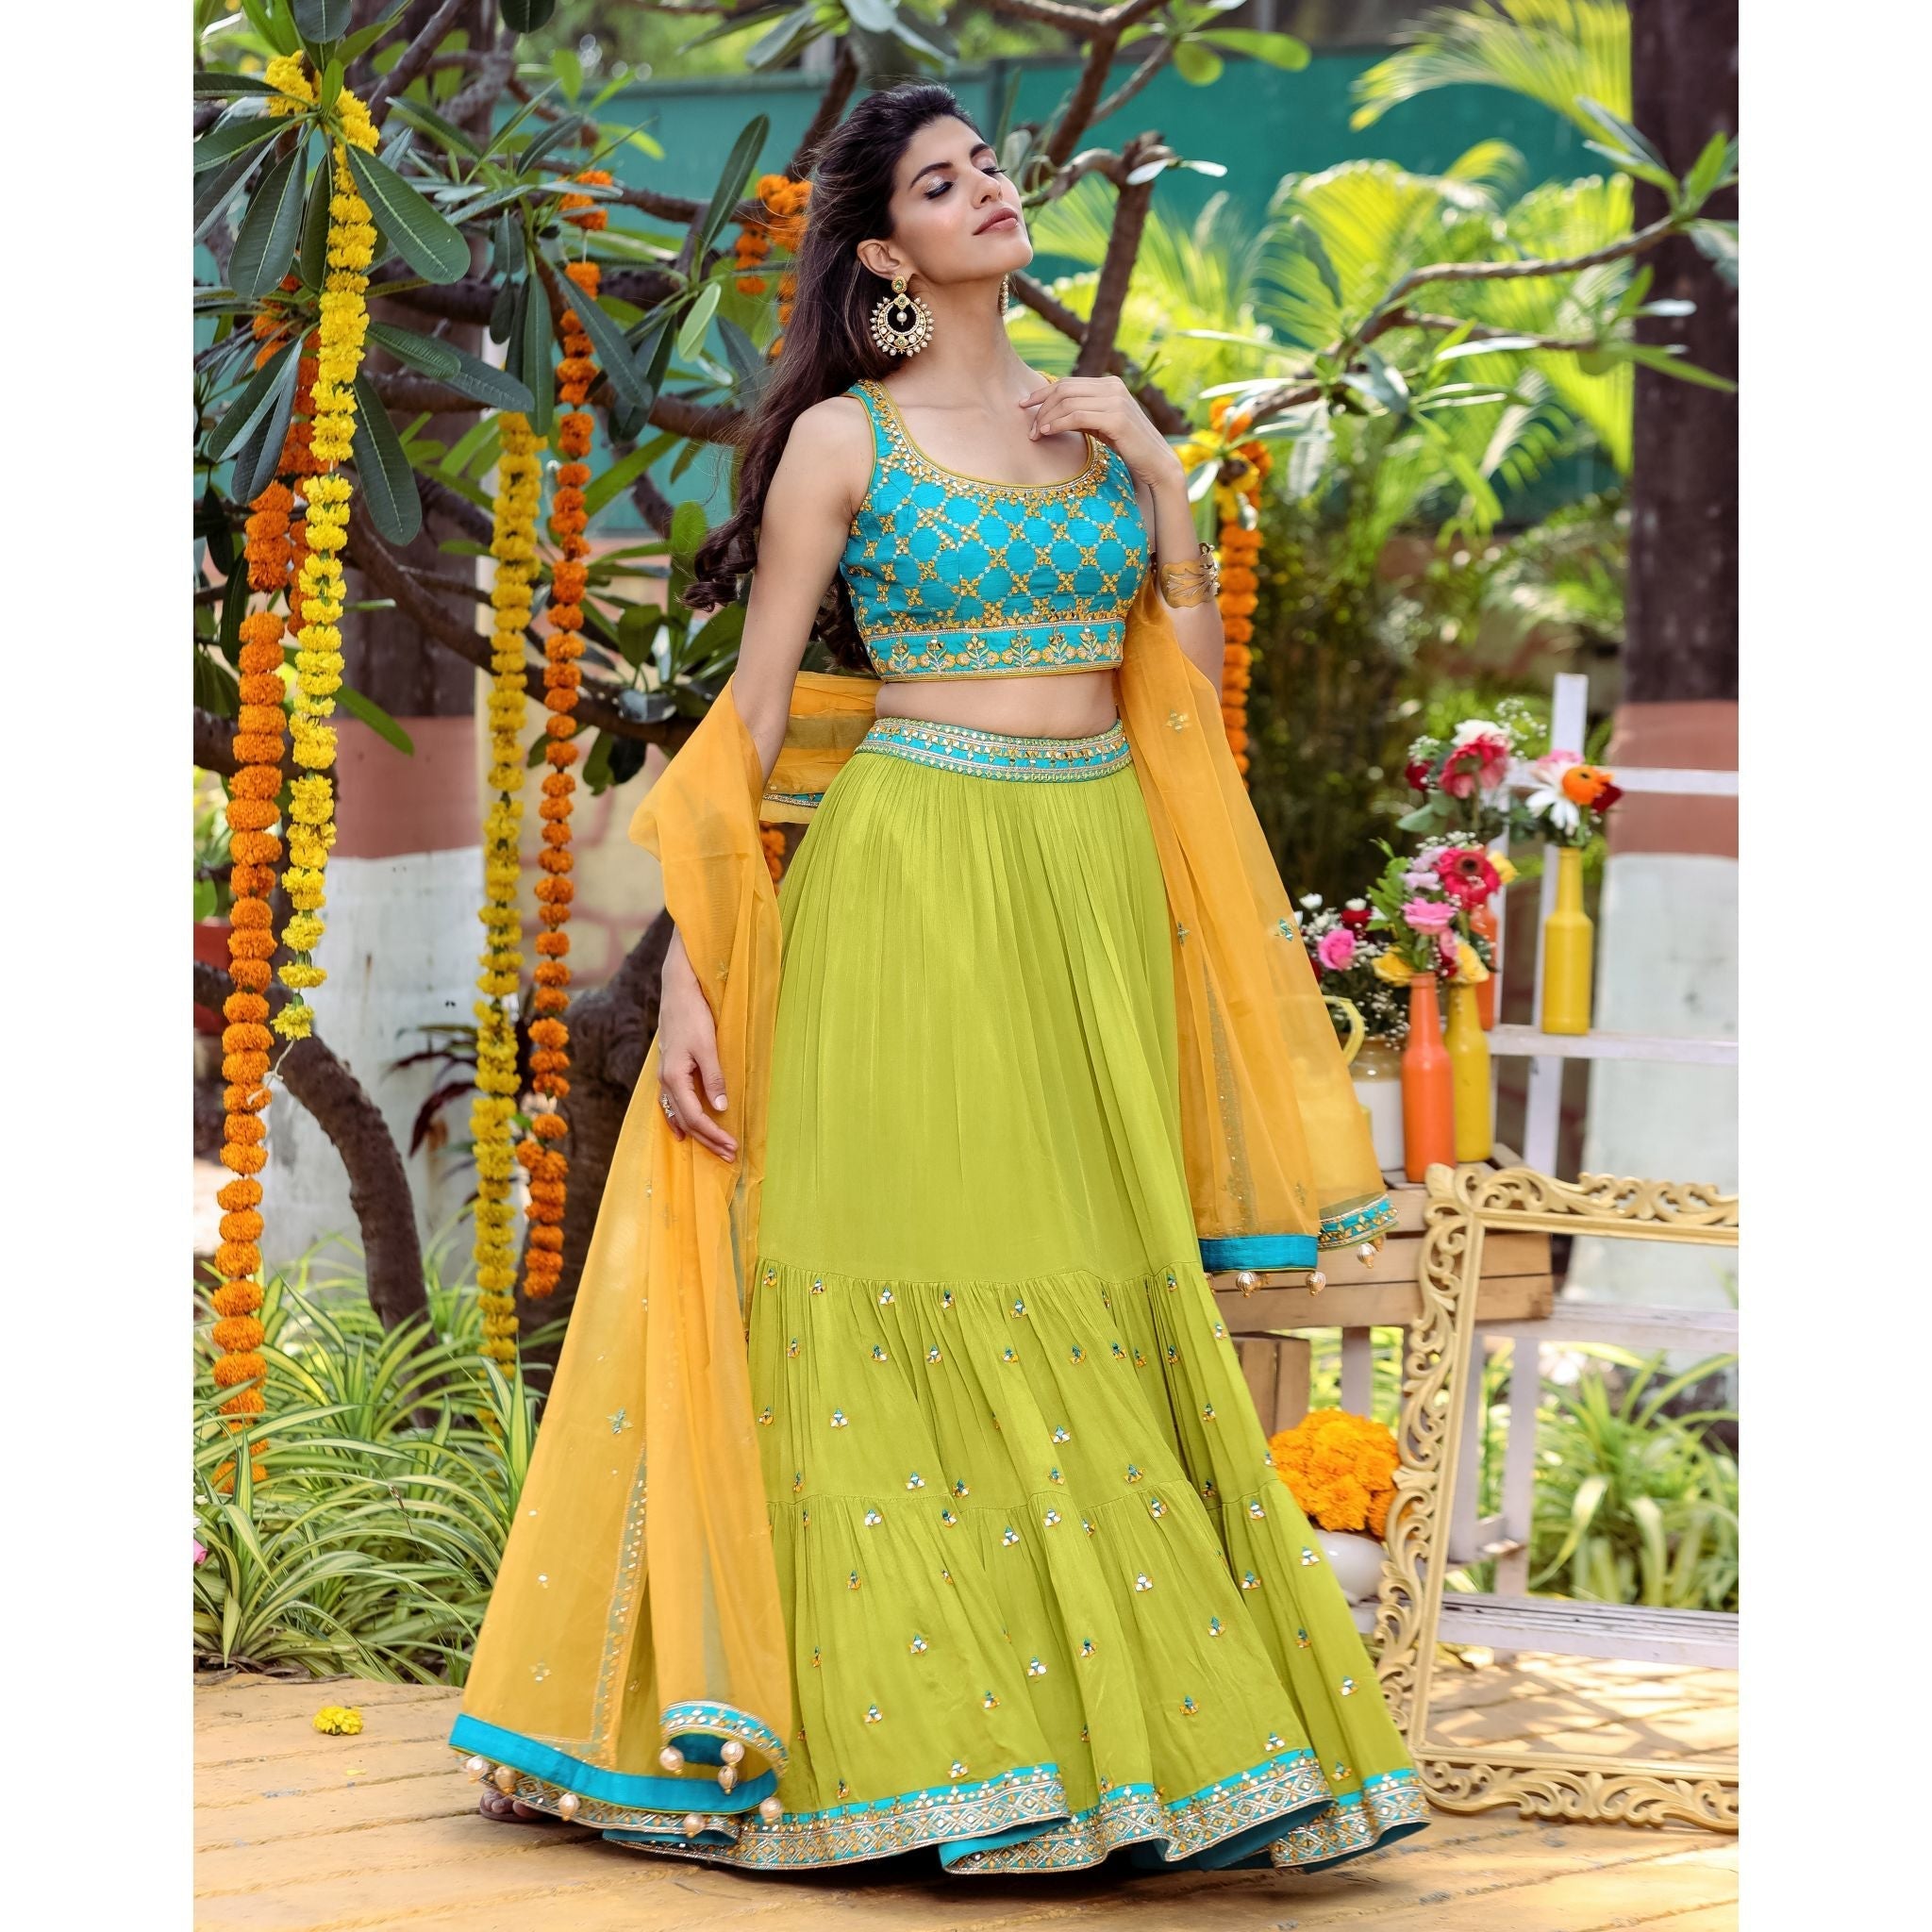 Turquoise And Green Mirrorwork Lehenga Set - Indian Designer Bridal Wedding Outfit